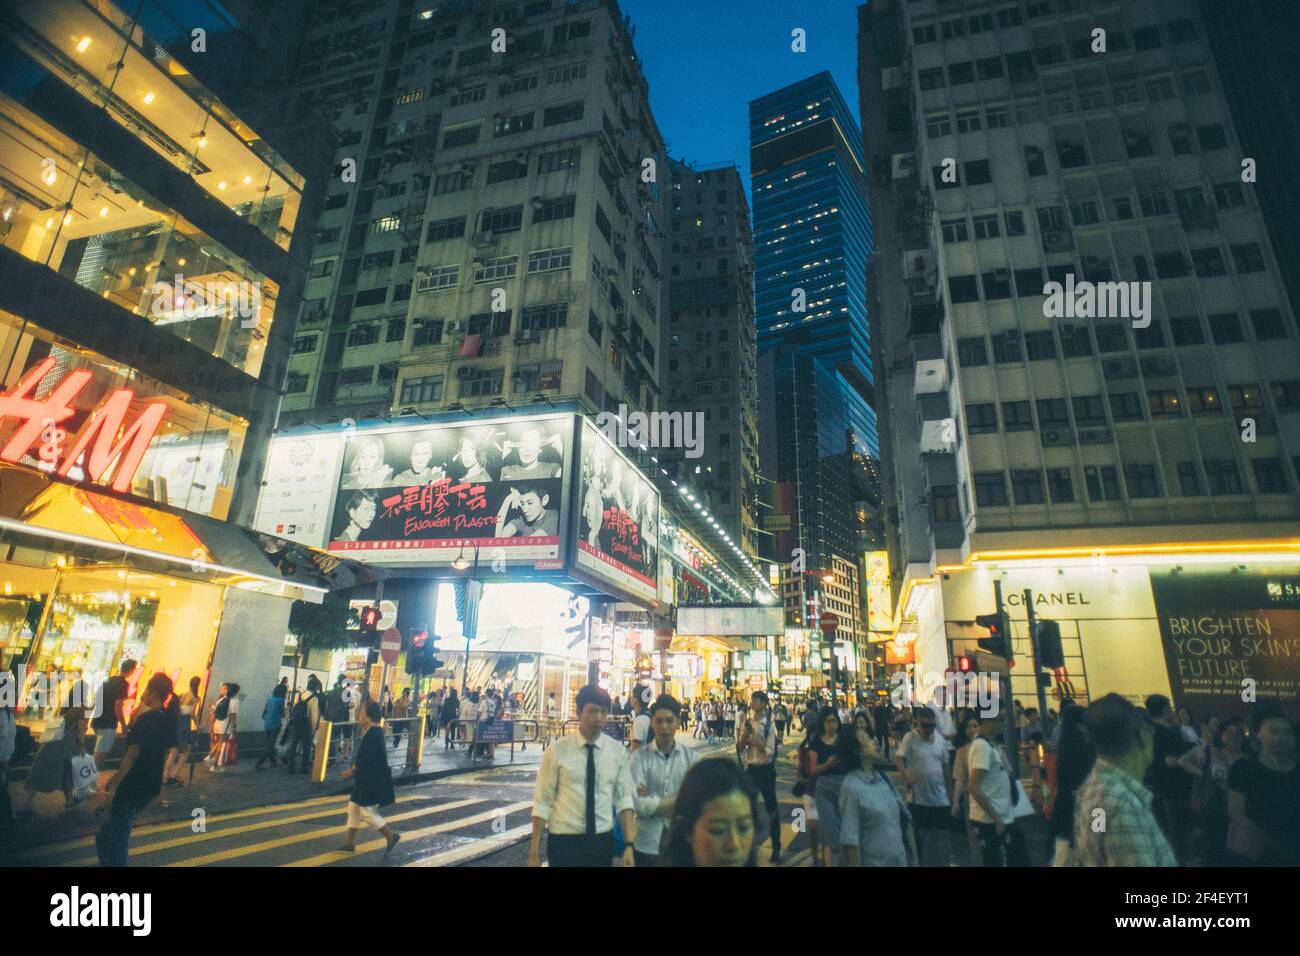 Hong Kong, 18 giugno 2019 - Vista sulla strada della Causeway Bay di Hong Kong, una trafficata area commerciale per lo shopping. Foto Stock